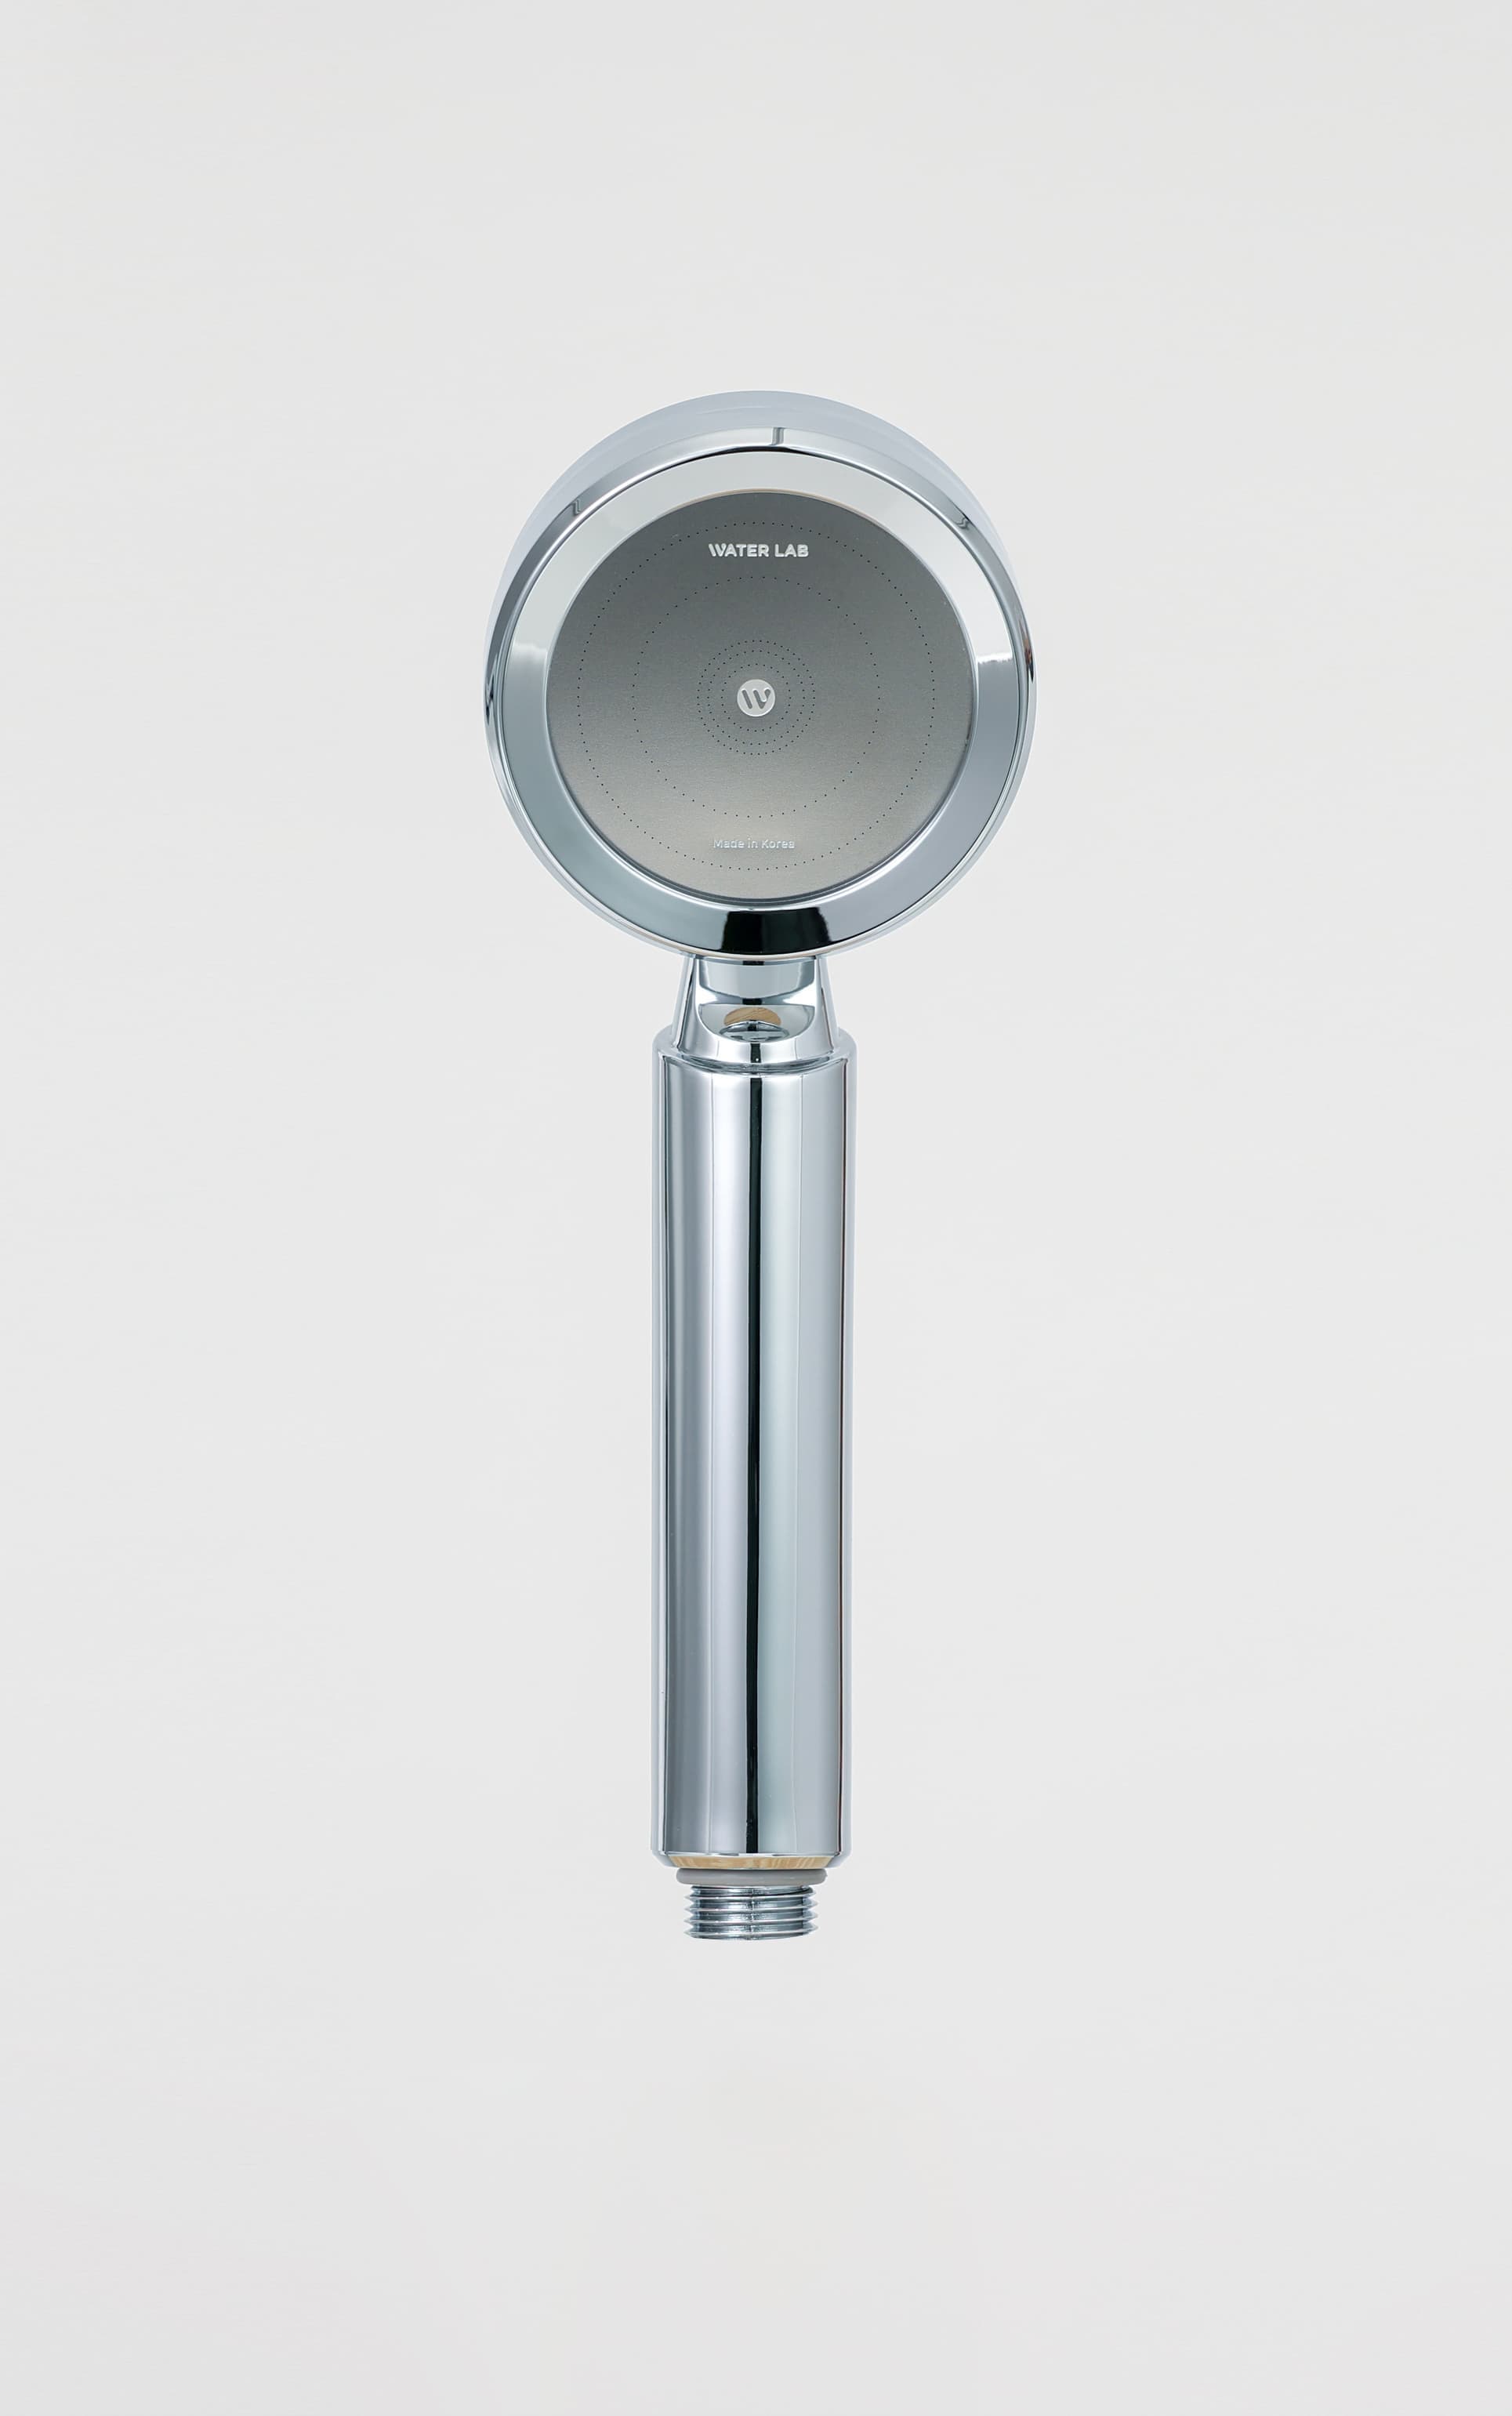 Water saving and high pressure handheld shower head LABWS800 MADE IN KOREA WATER LAB